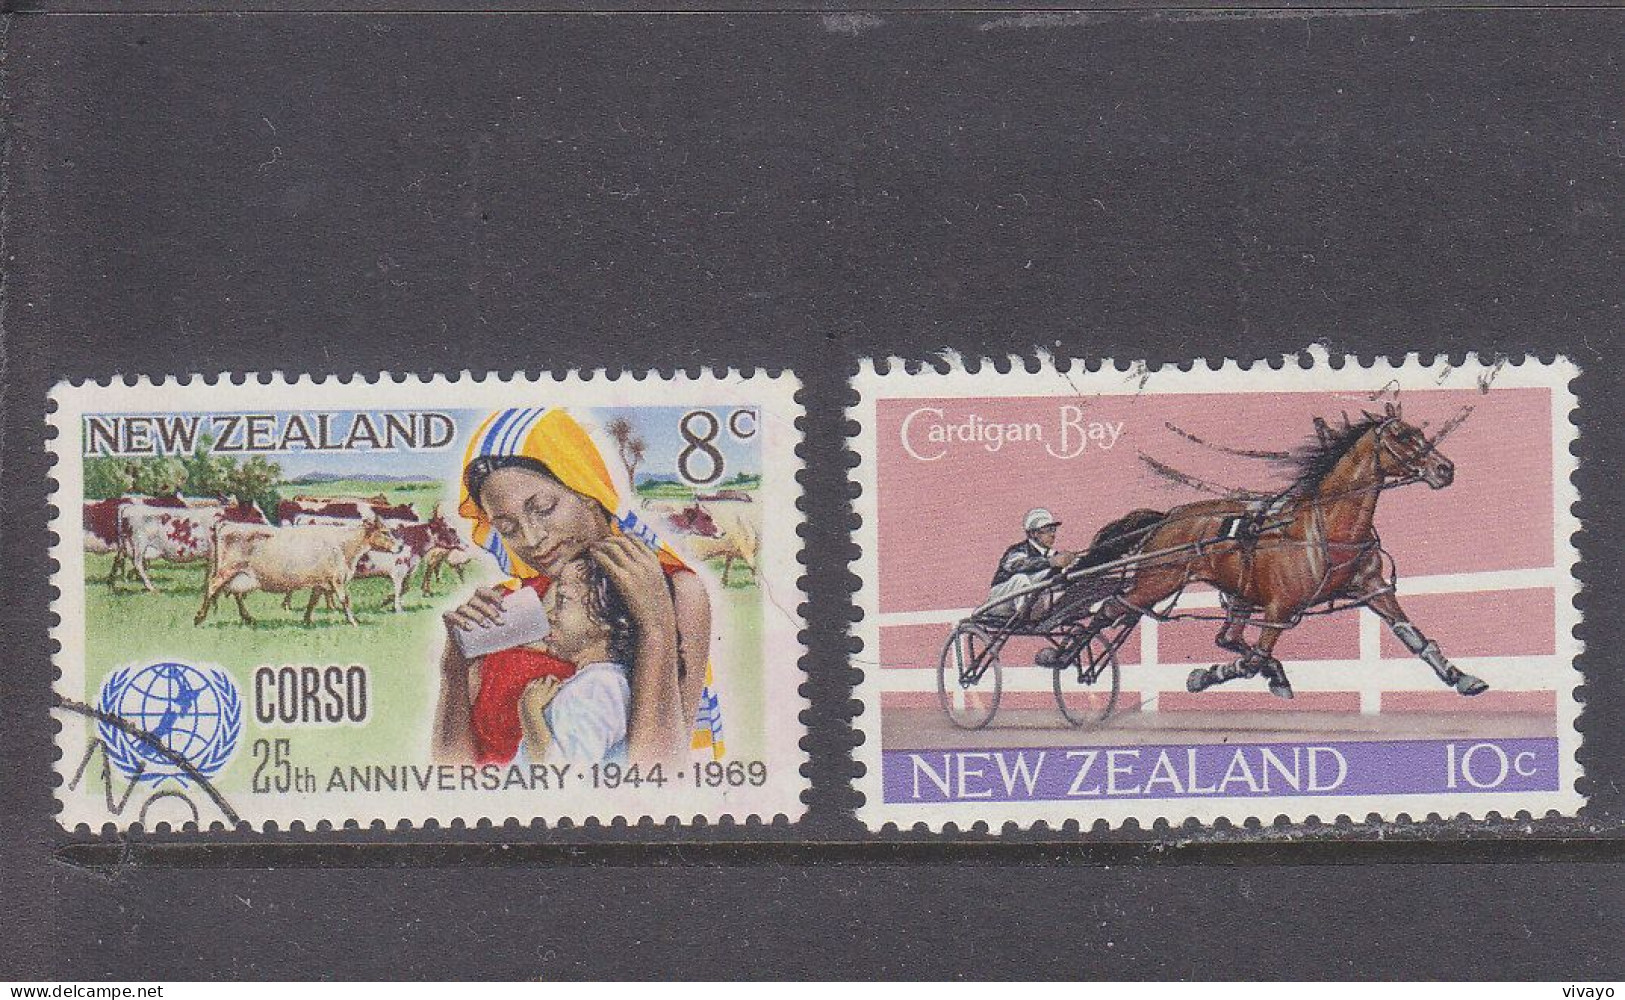 NEW ZEALAND - O / FINE CANCELLED - 1969/1970 - CORSO , CARDIGAN BAY , RACING - Yv. 498, 500 - Mi. 515, 516 - Oblitérés